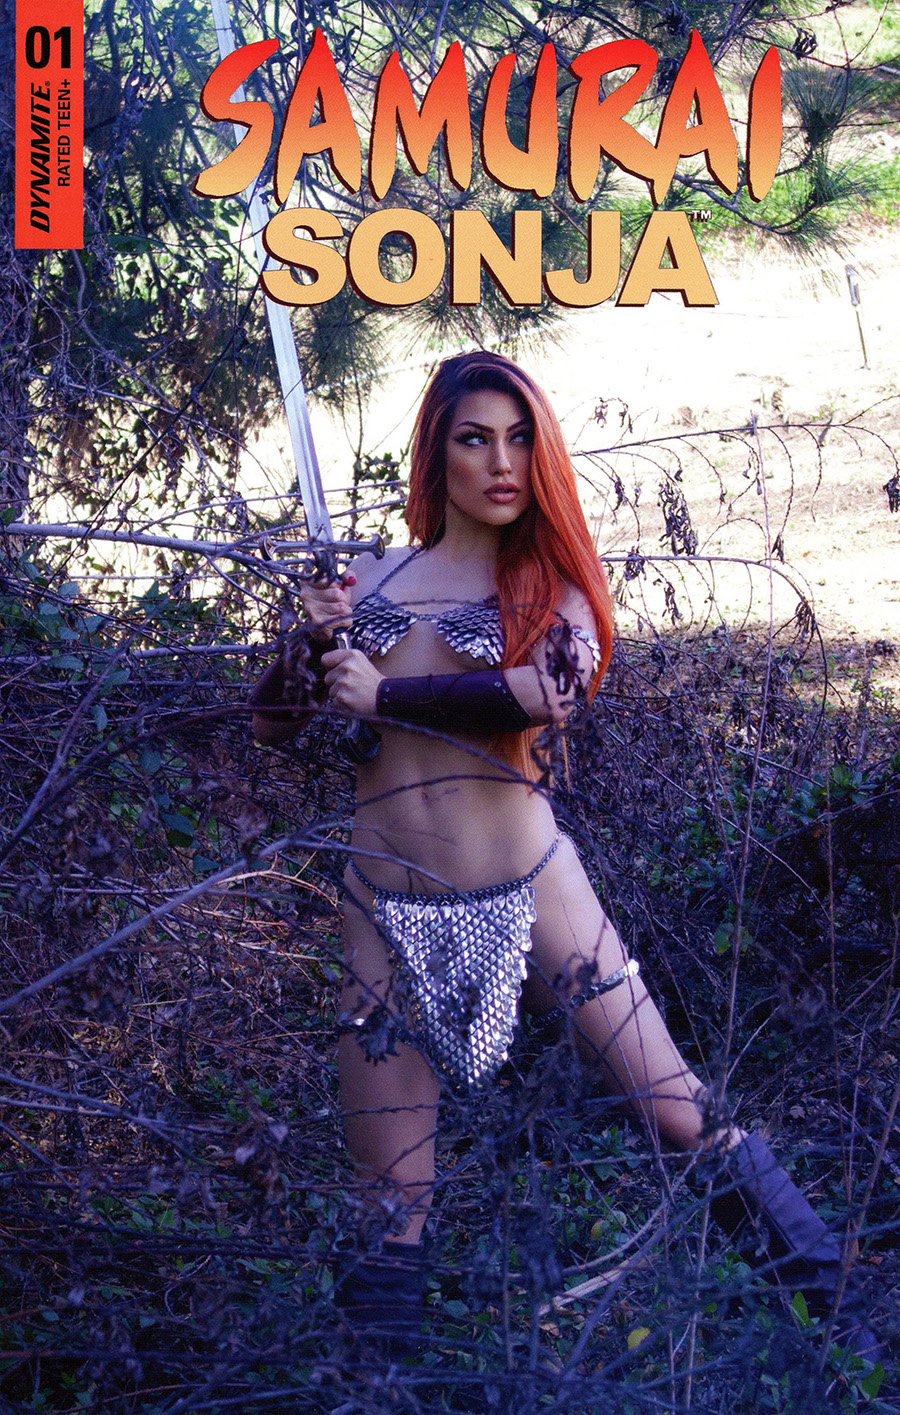 Samurai Sonja #1 Cover E Variant Cosplay Photo Cover